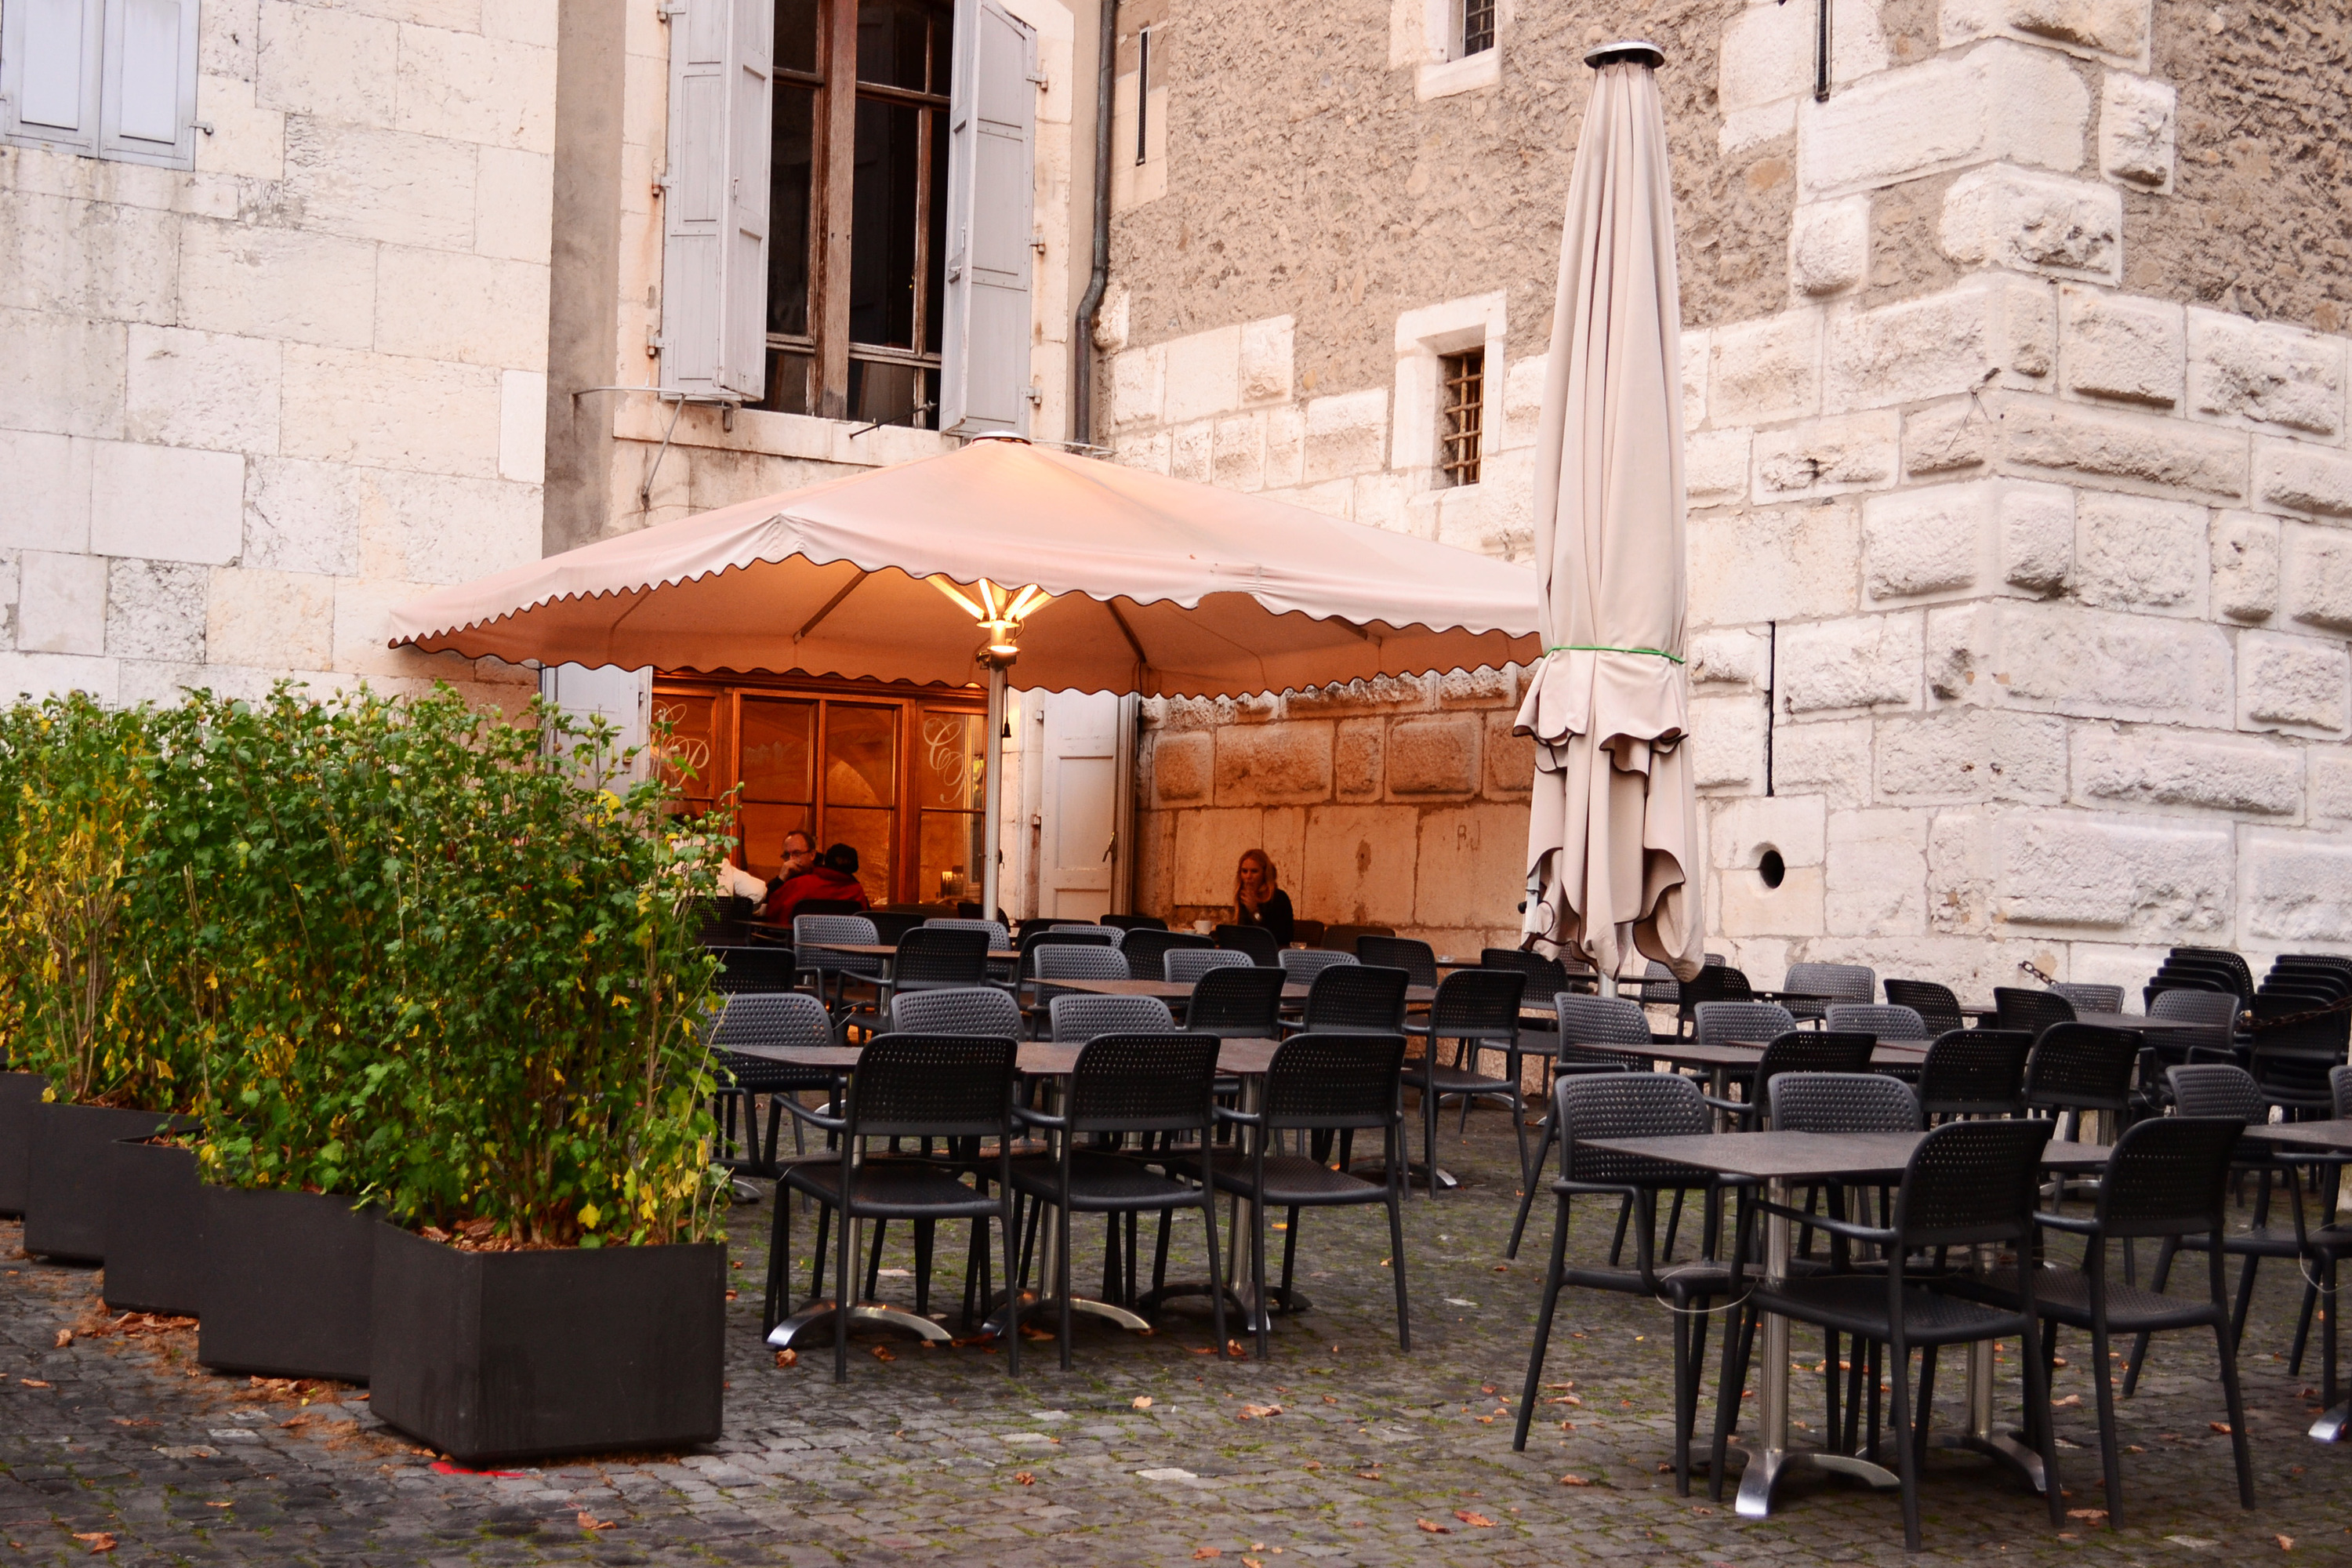 Geneva restaurants – Geneva dining guide – Time Out Switzerland